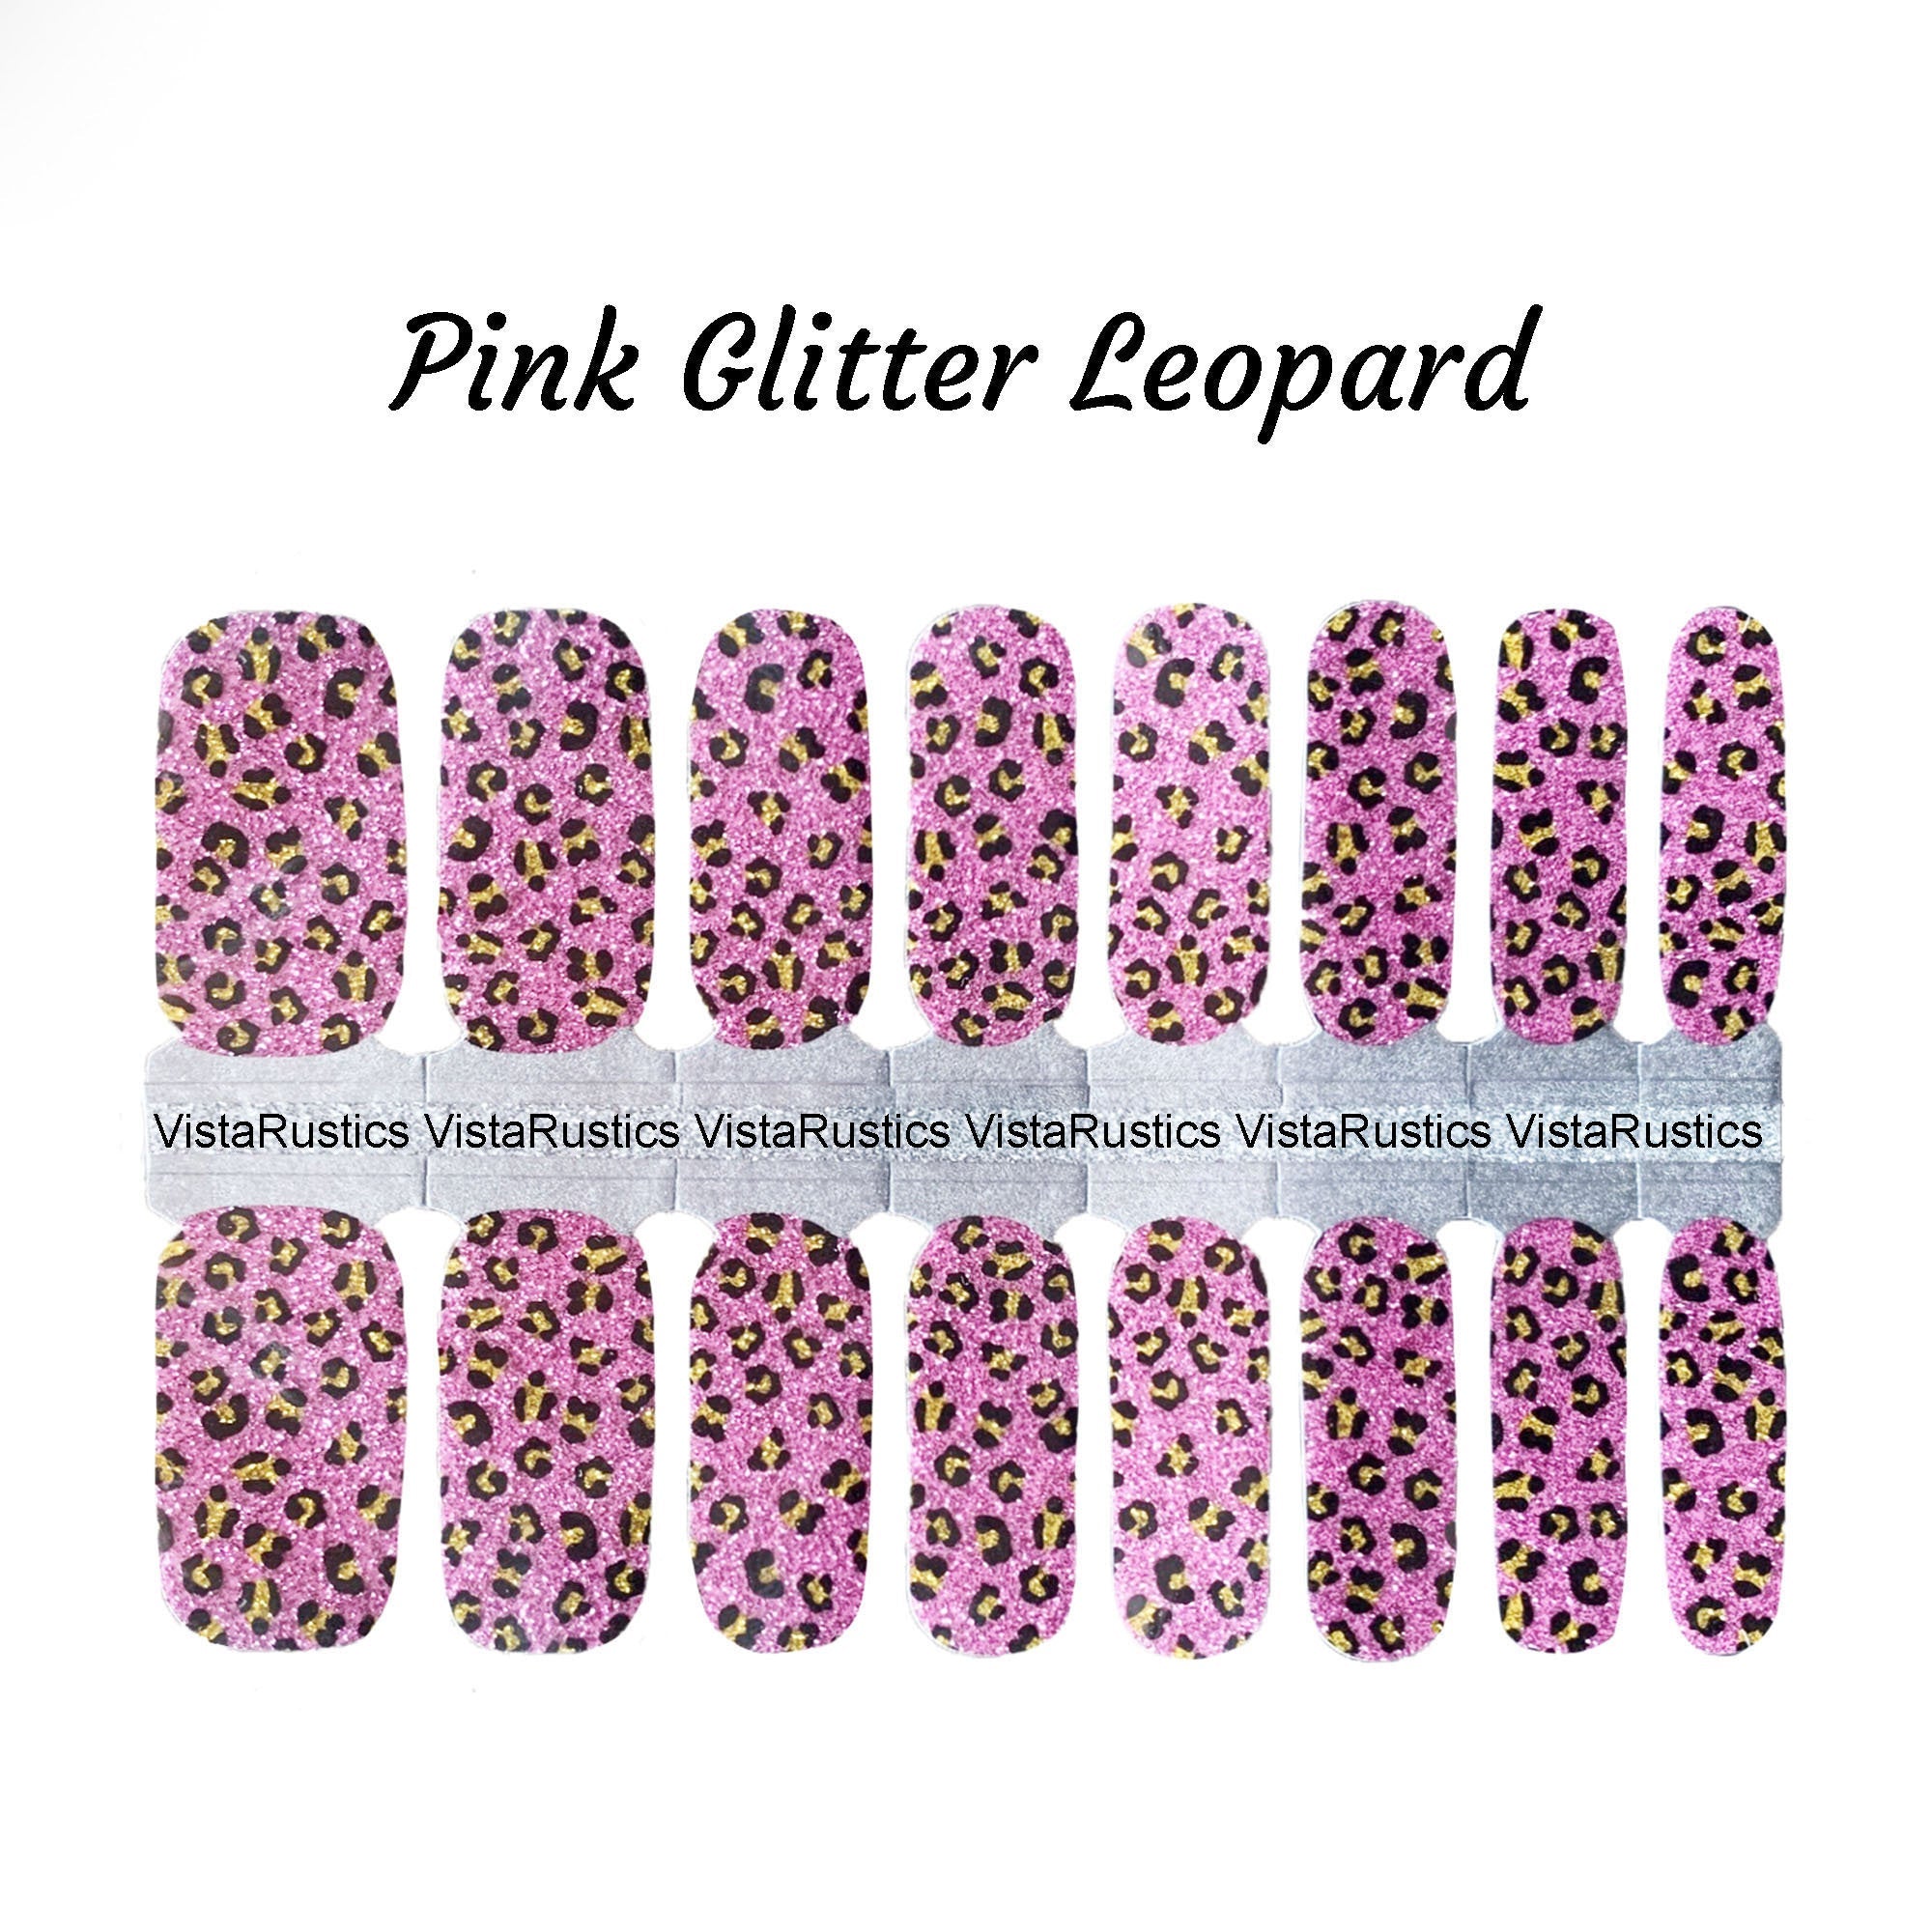 Pink Glitter Leopard my